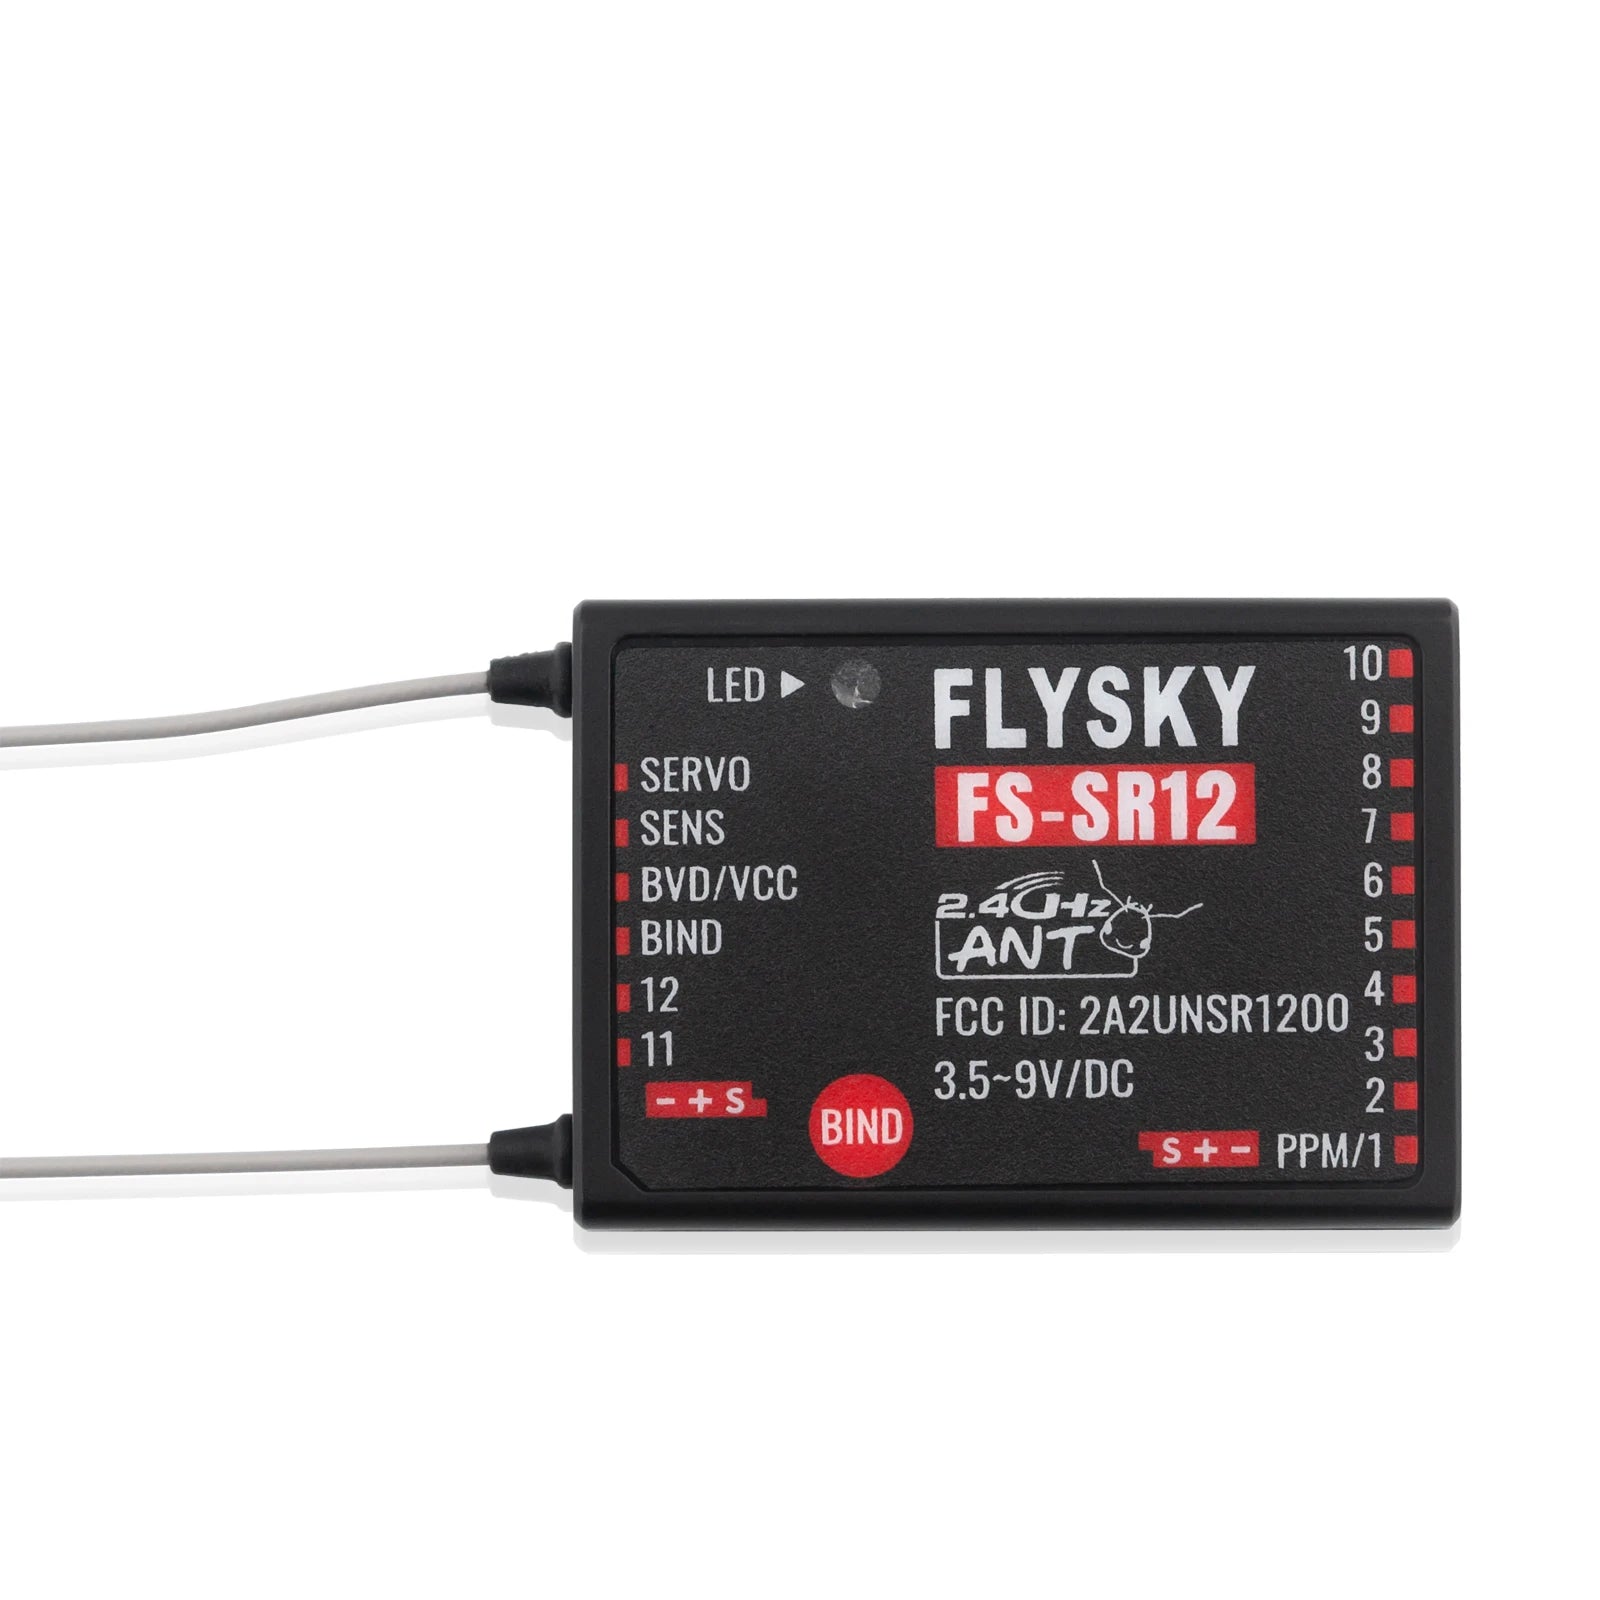 FLYSKY FS-SR12 12CH 2.4G Receiver, 2.4G Protocol: ANT Resolution: 4096 Antenna: Two antennas